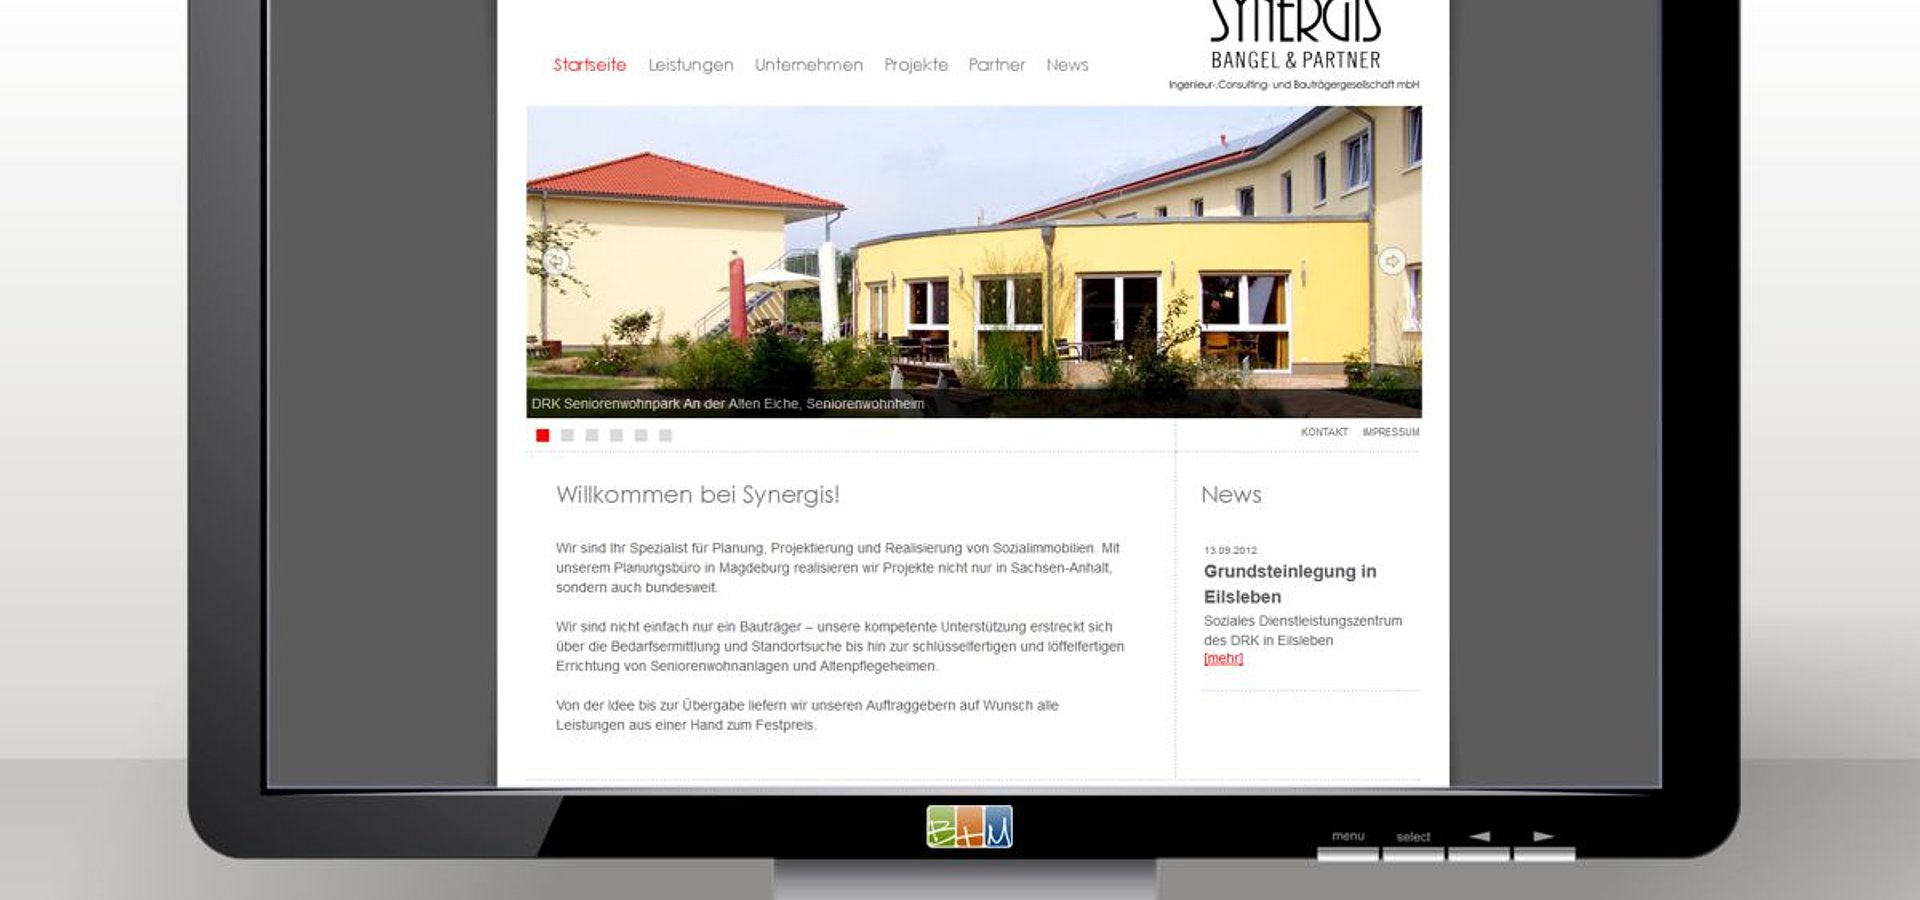 Webdesign: Webdesign für SYNERGIS Bangel & Partner GmbH / 2011